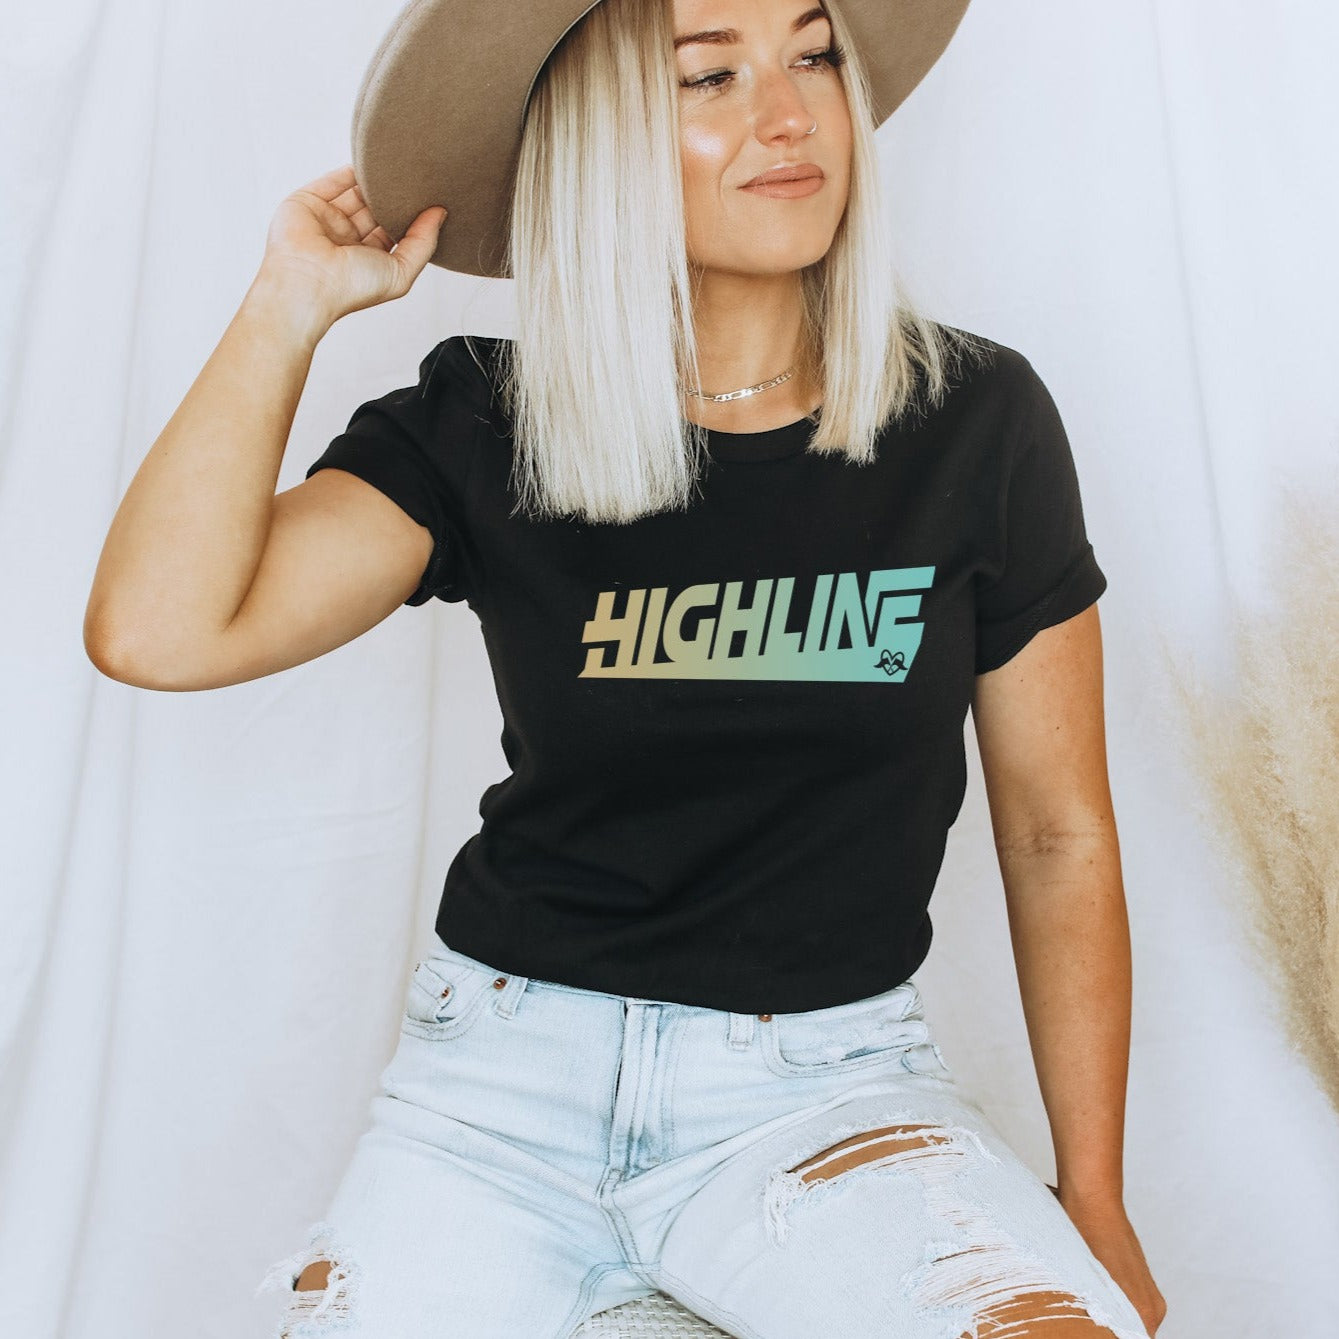 Highline-Clothing-Brand-Black-Shirt